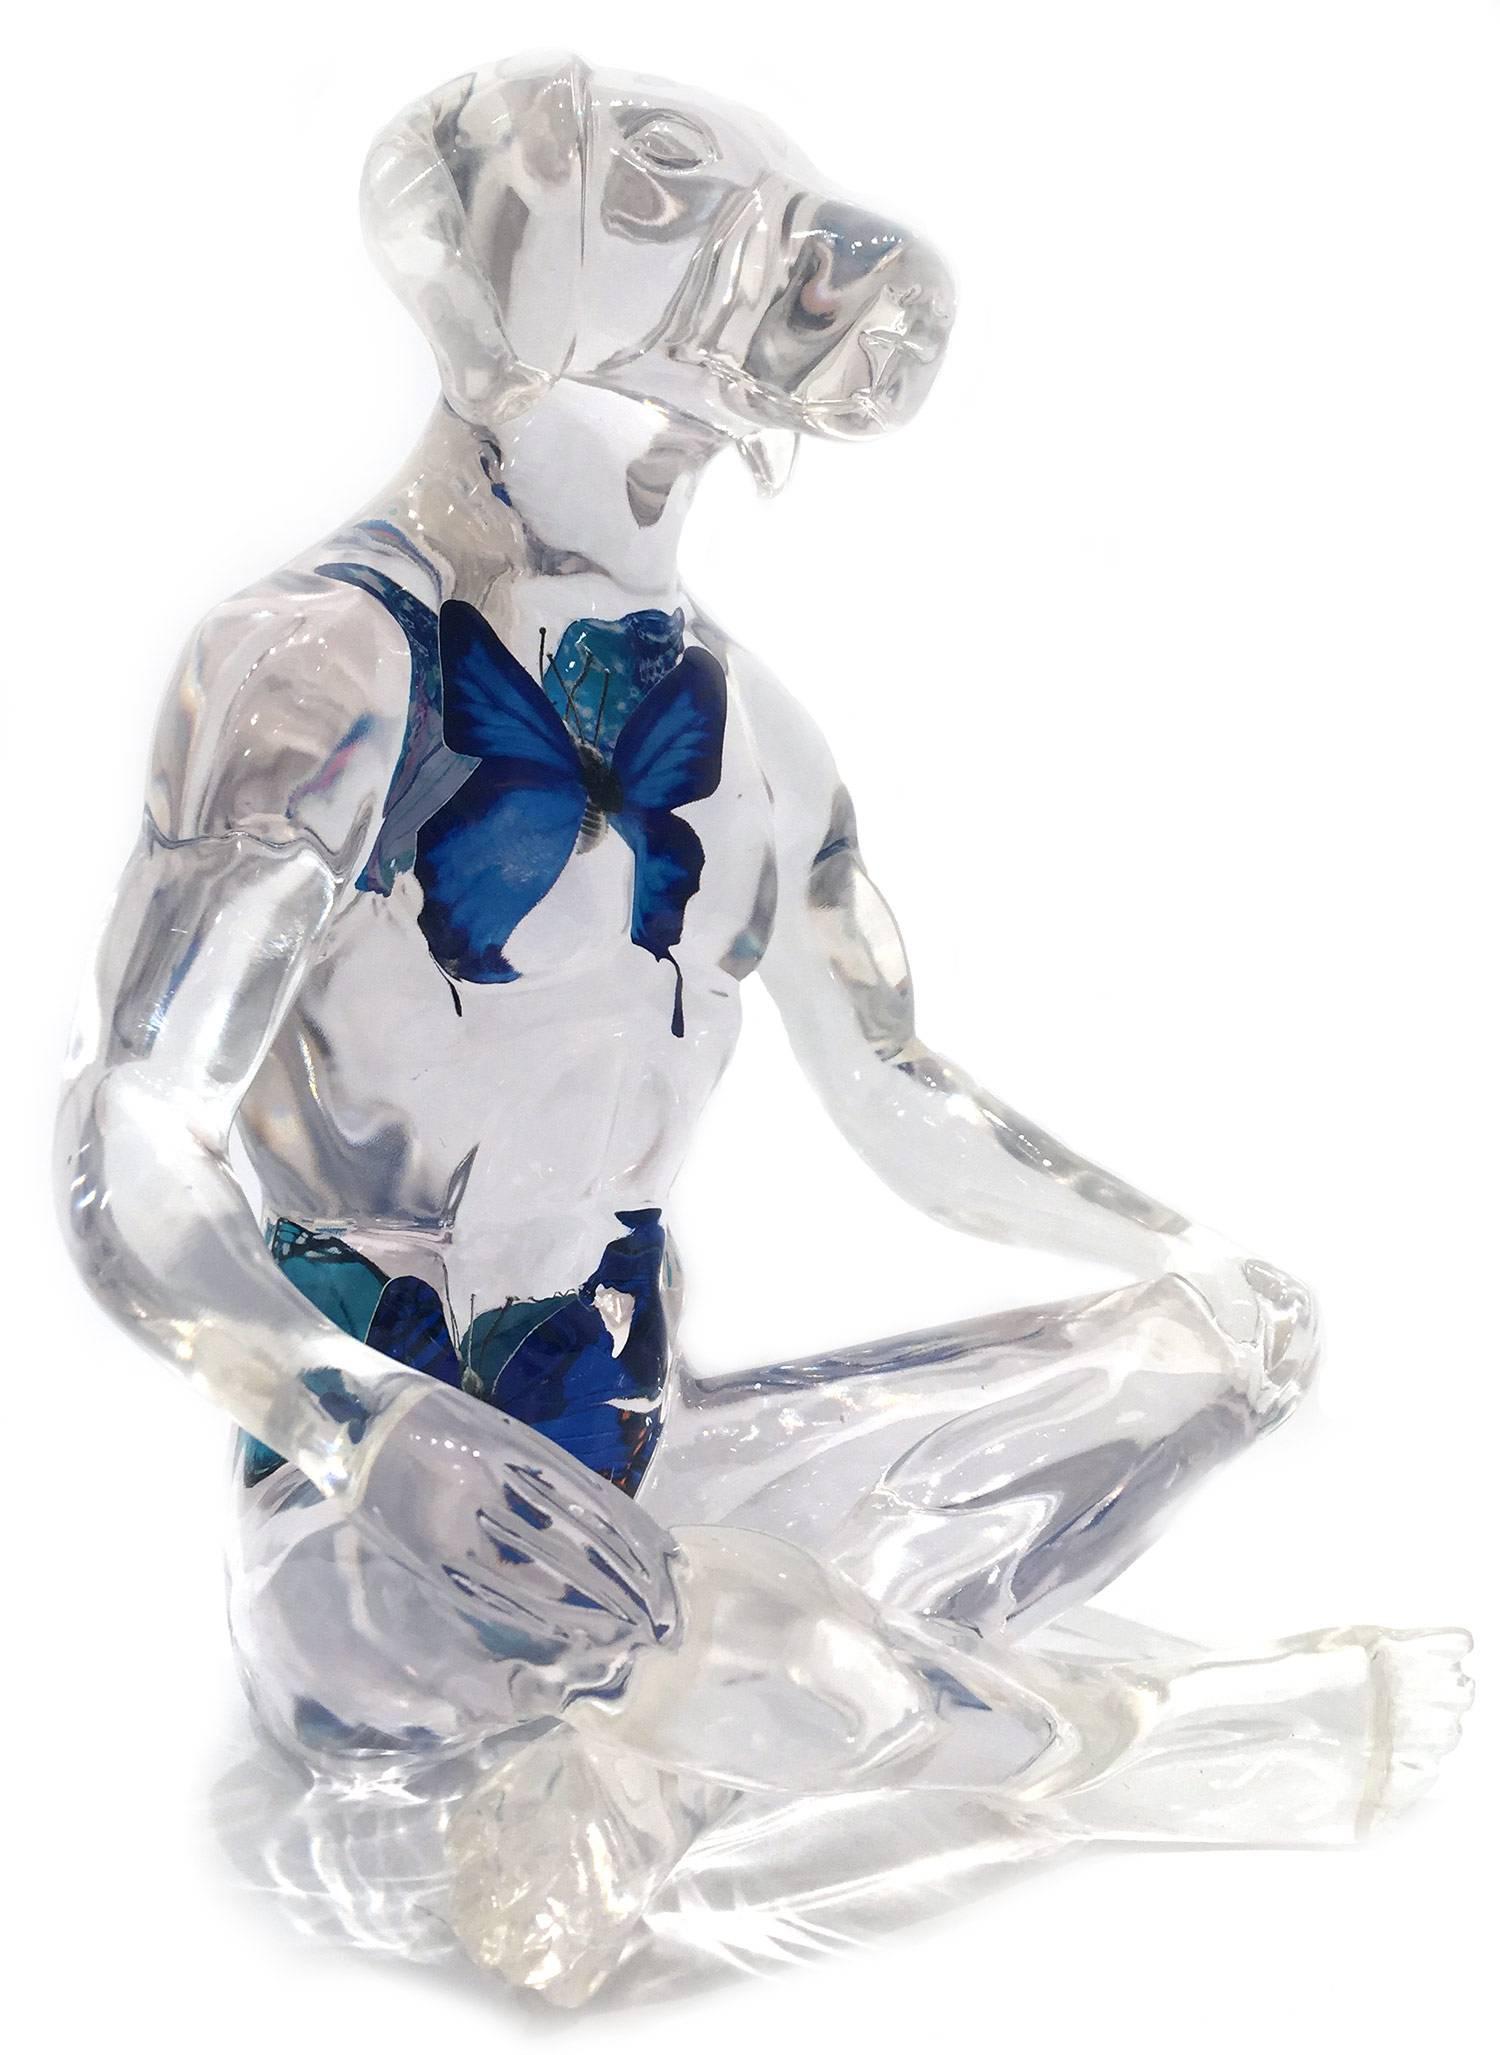 Gillie and Marc Schattner Figurative Sculpture - Butterfly Blue Dogman